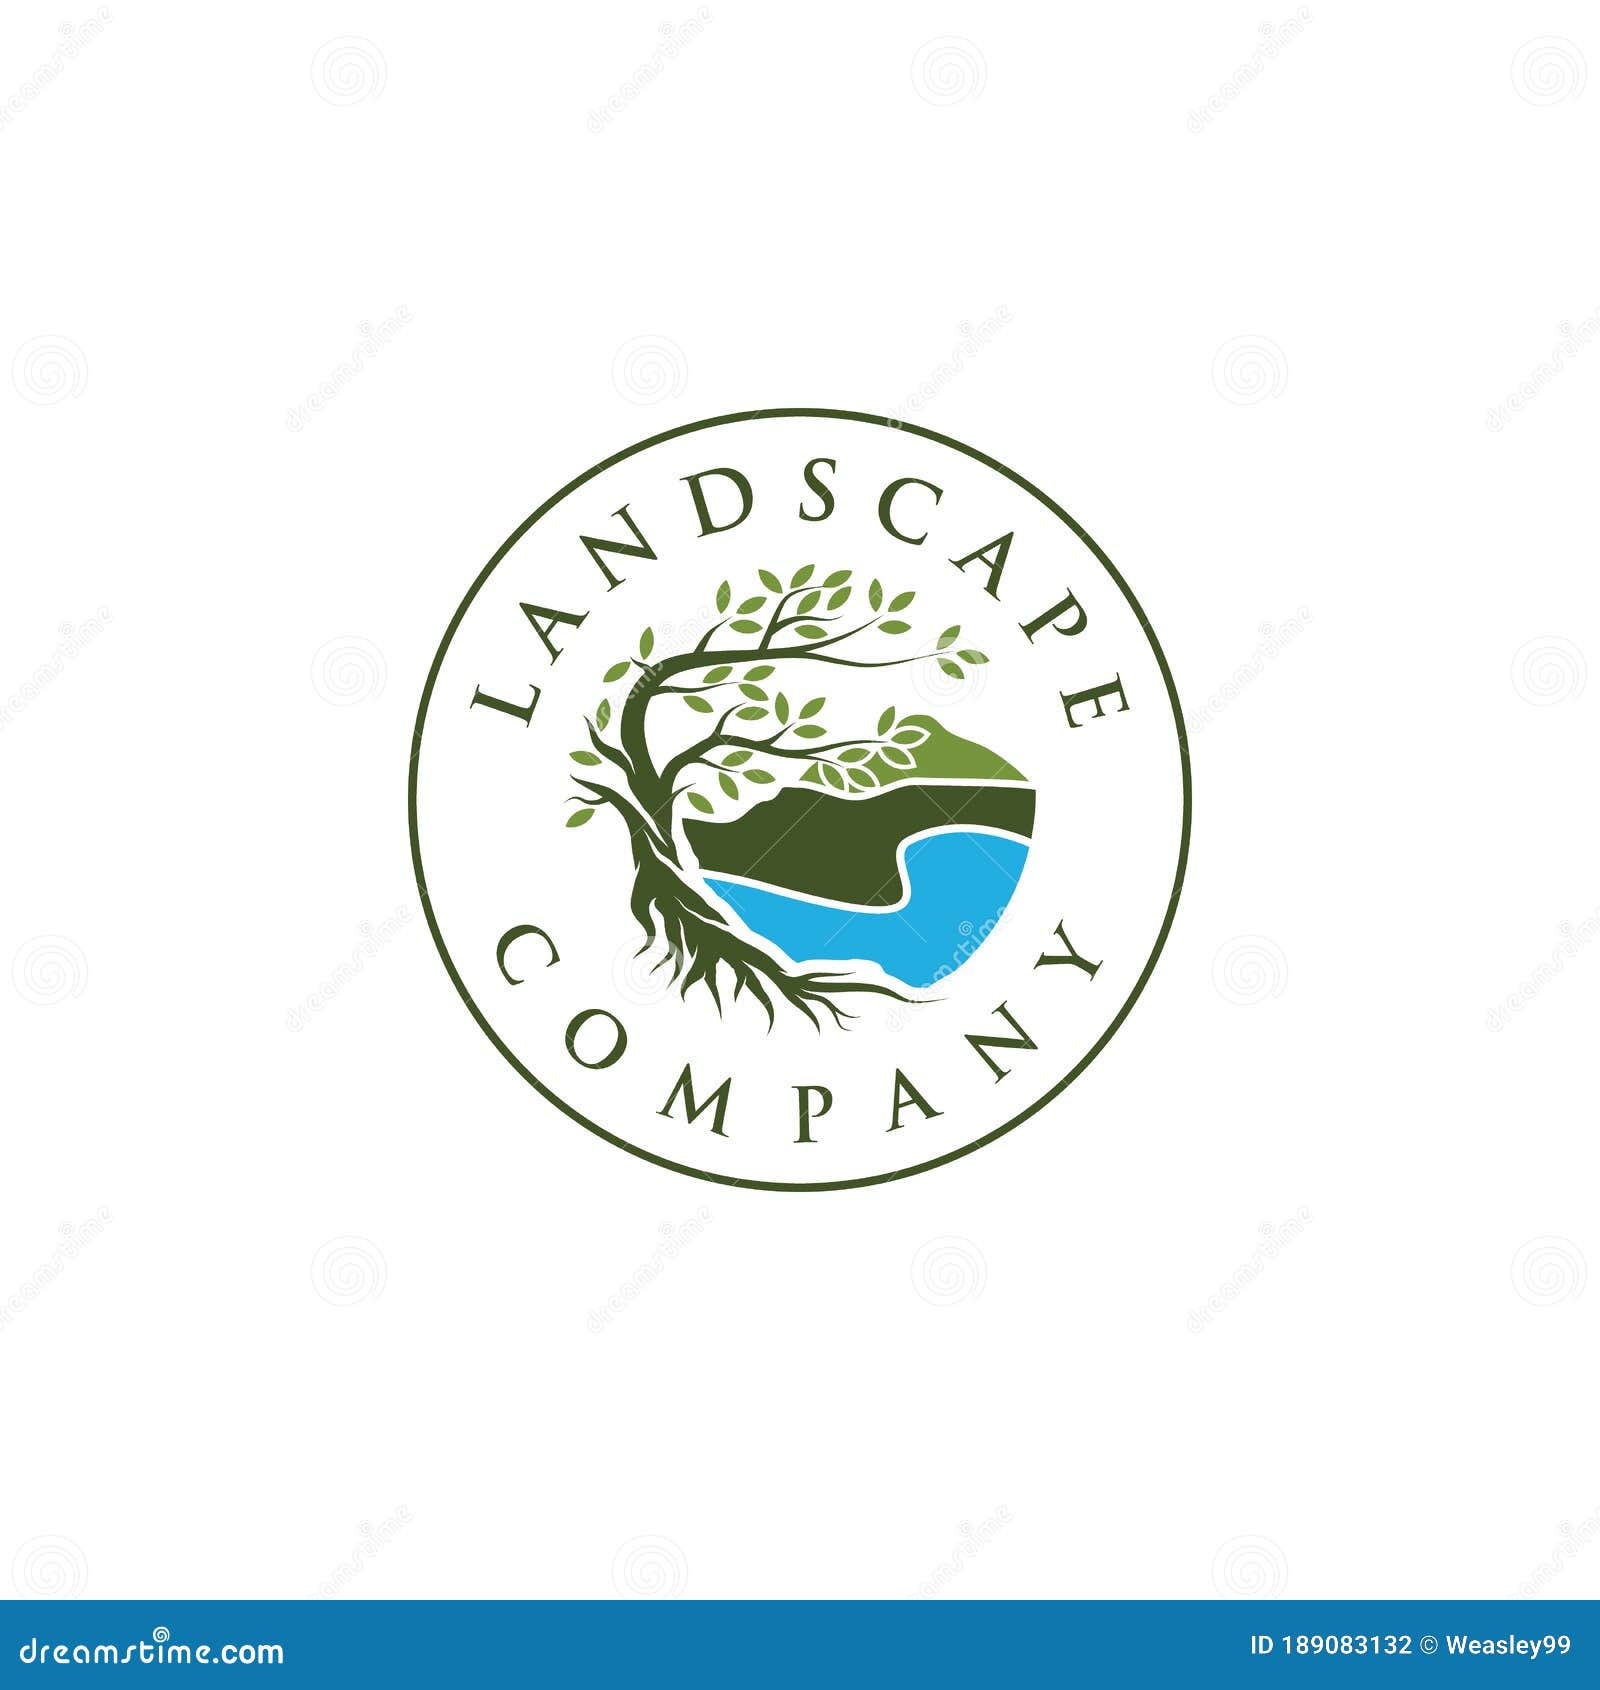 landscape logo,tree and roots logo    on beach , abstract mangrove tree logo 